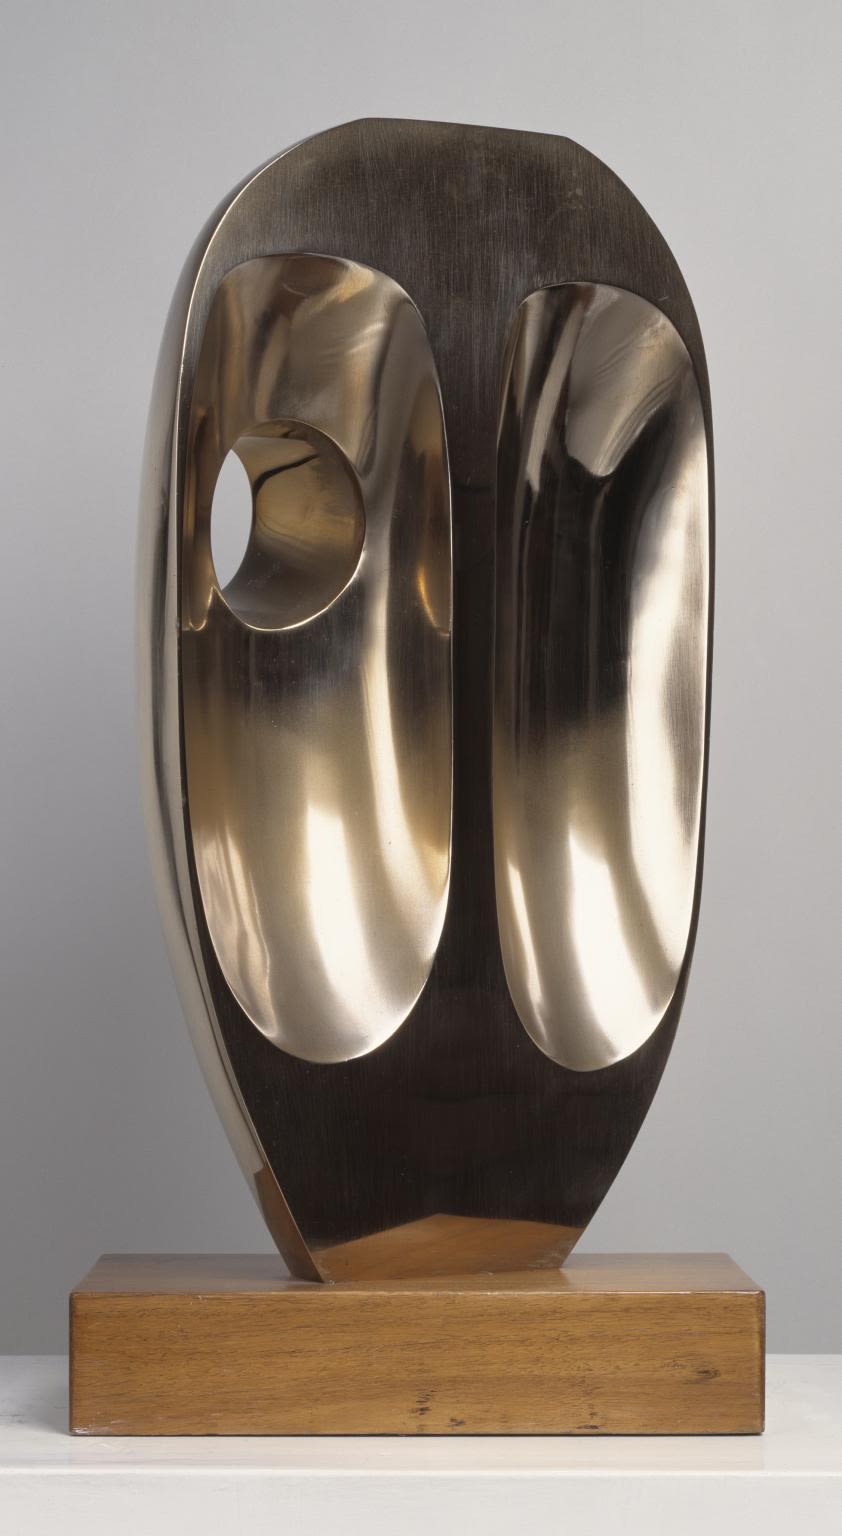 Aguirre Design - barbara Hepworth bronze